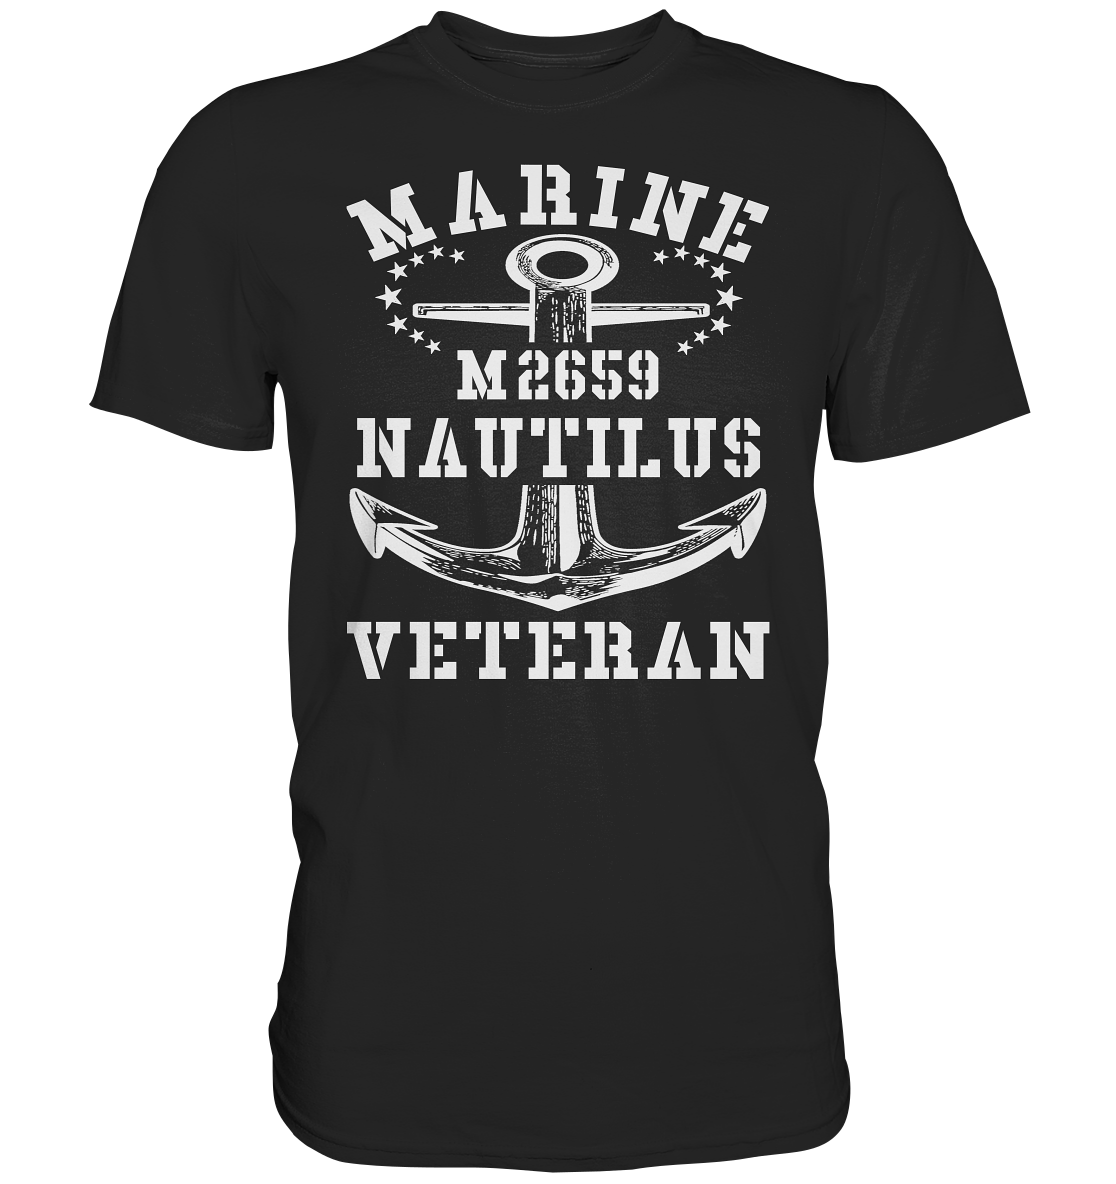 BiMi M2659 NAUTILUS Marine Veteran - Premium Shirt